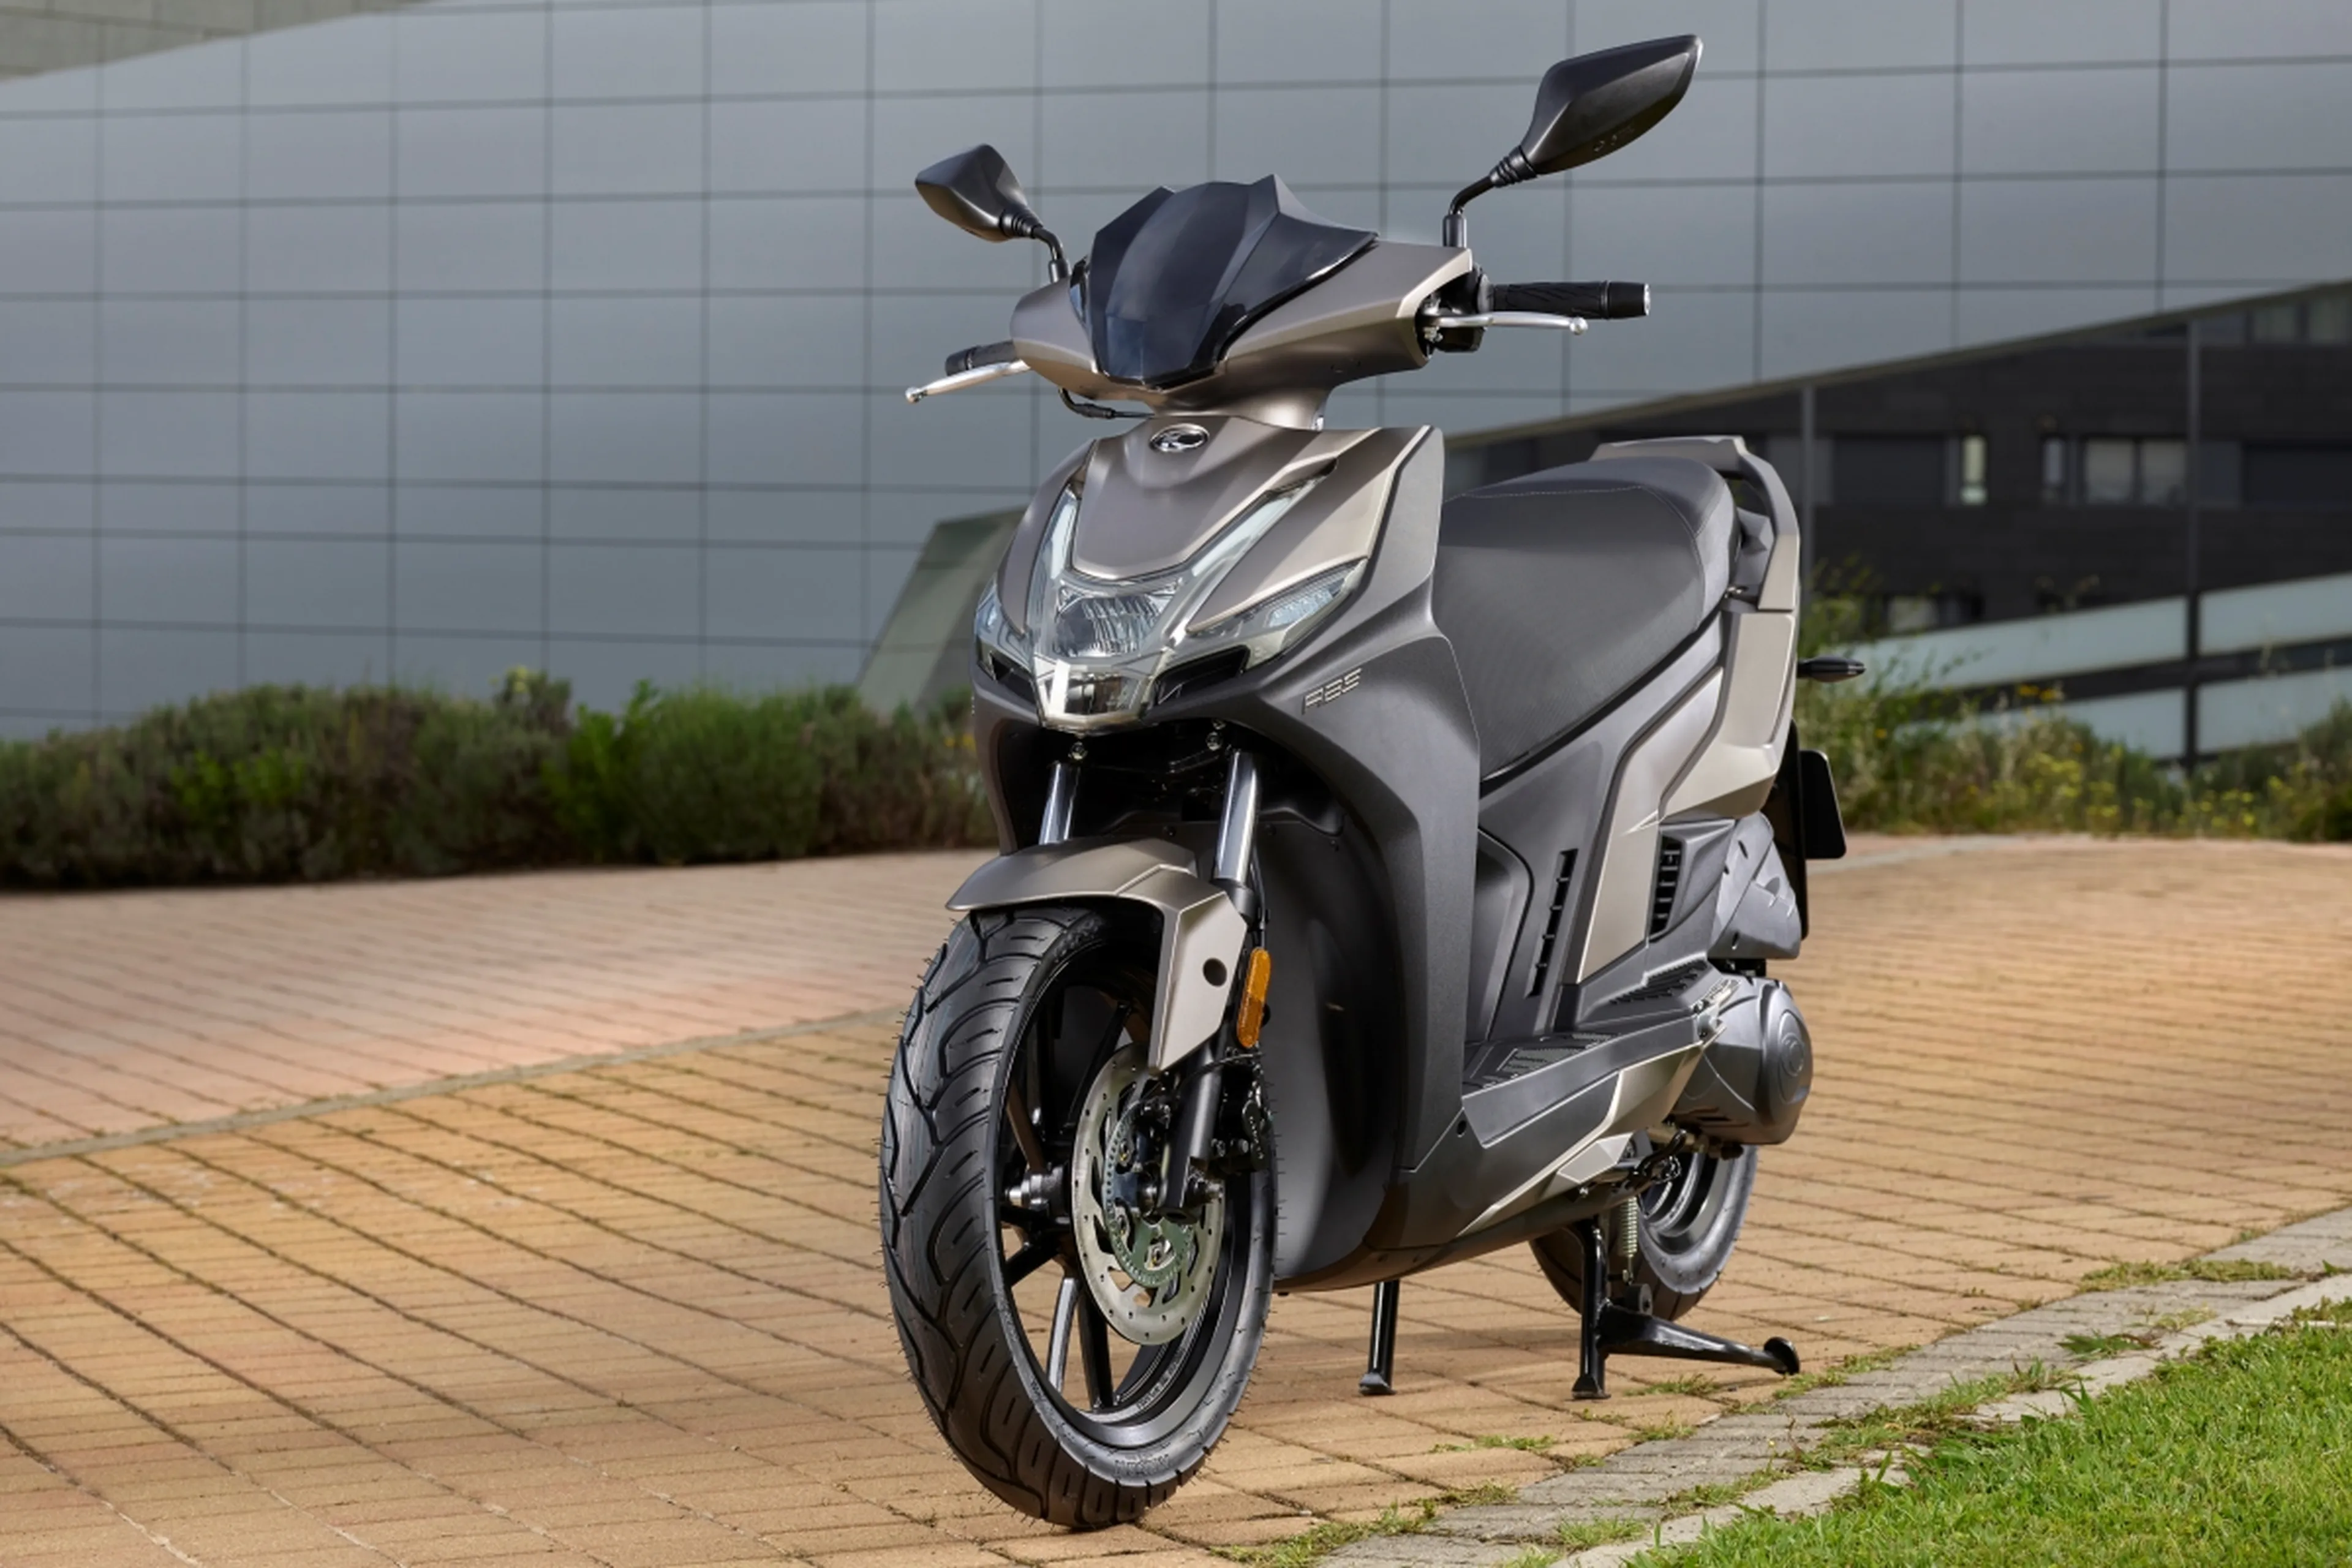 Kymco Agility S 125 ABS, un nuevo e interesante scooter con excelente relación calidad/precio